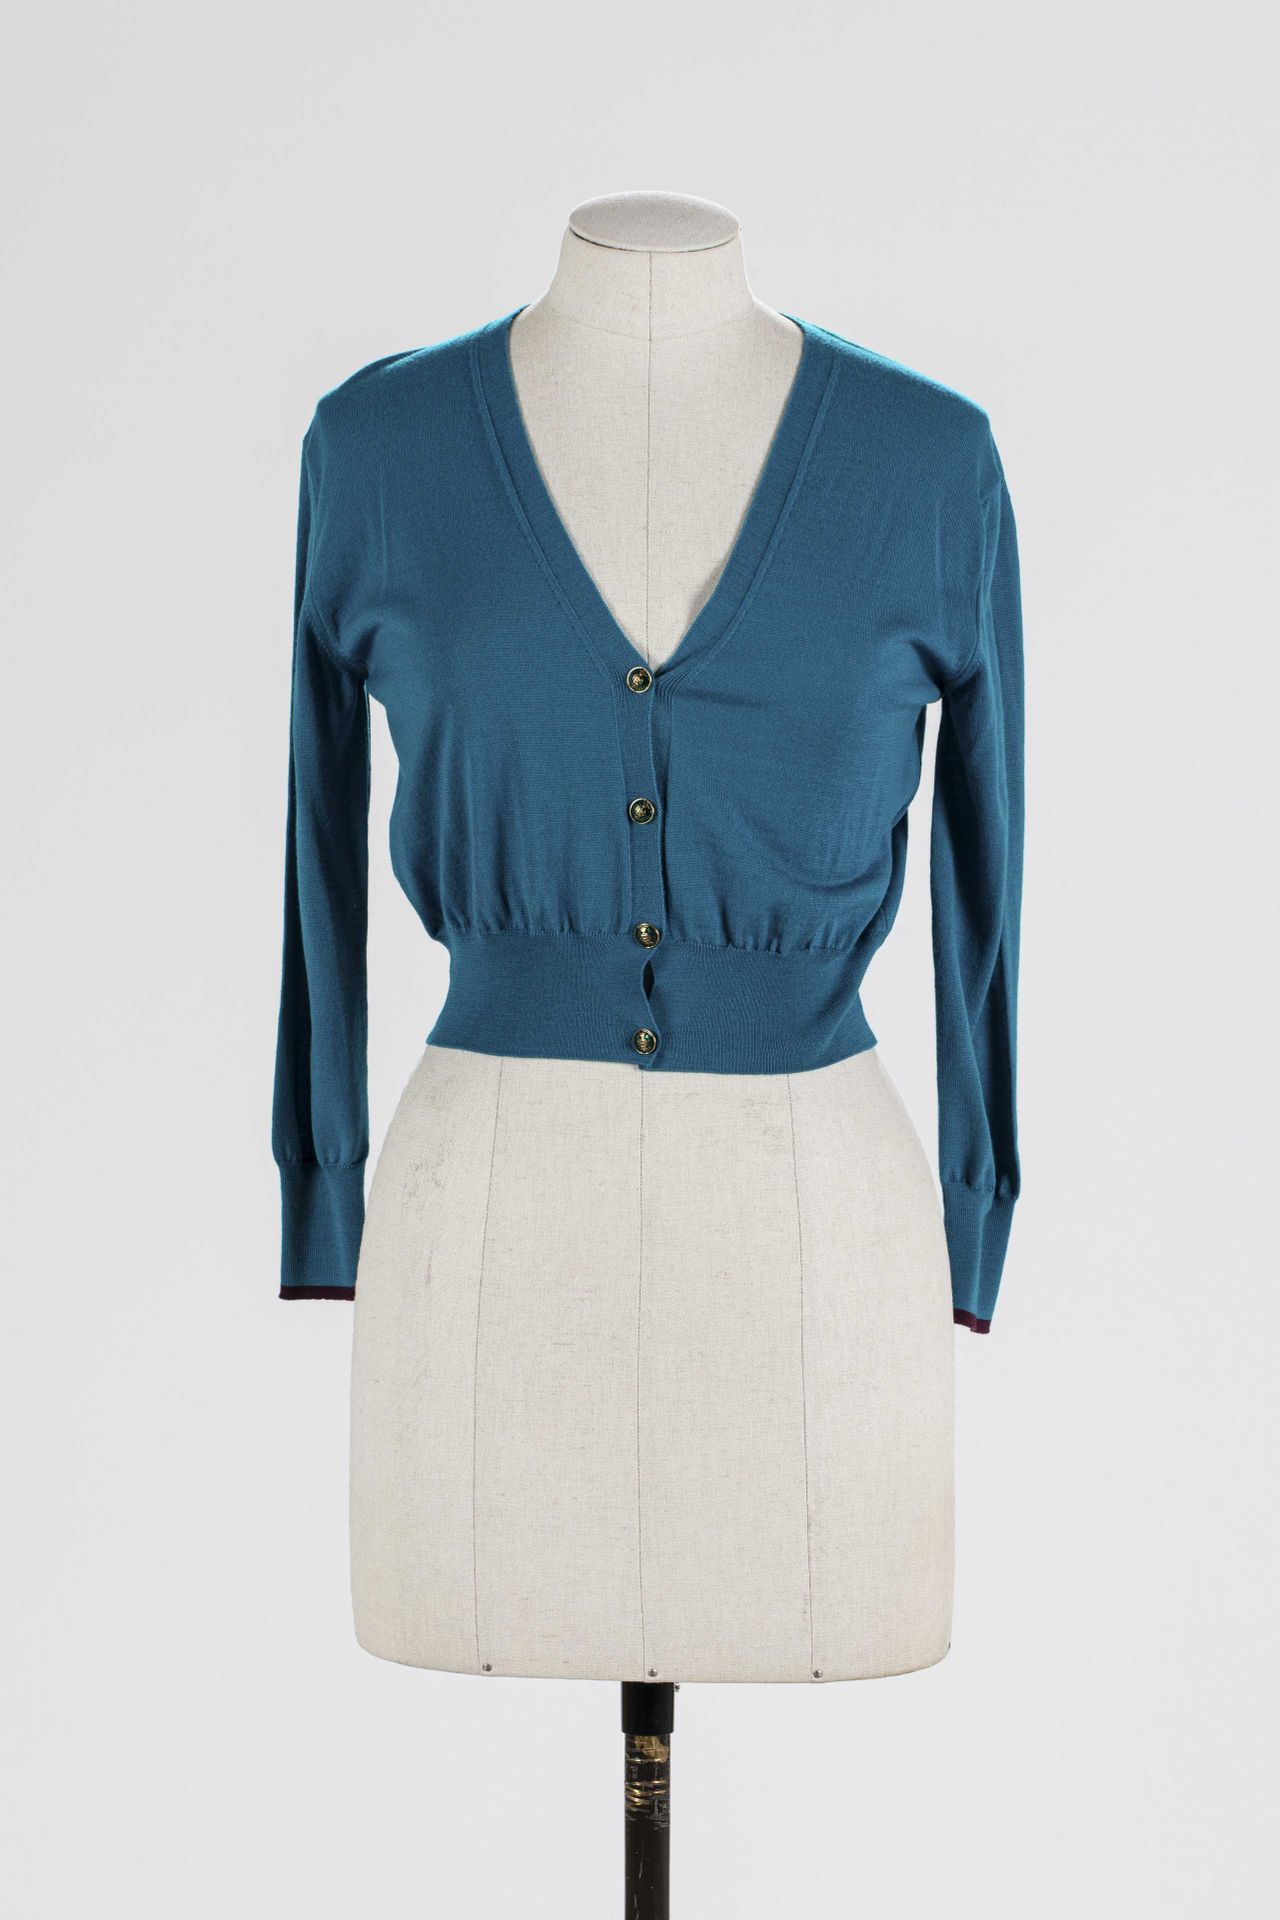 Null EMILIO PUCCI: blue virgin wool short cardigan, long sleeves, single breaste&hellip;